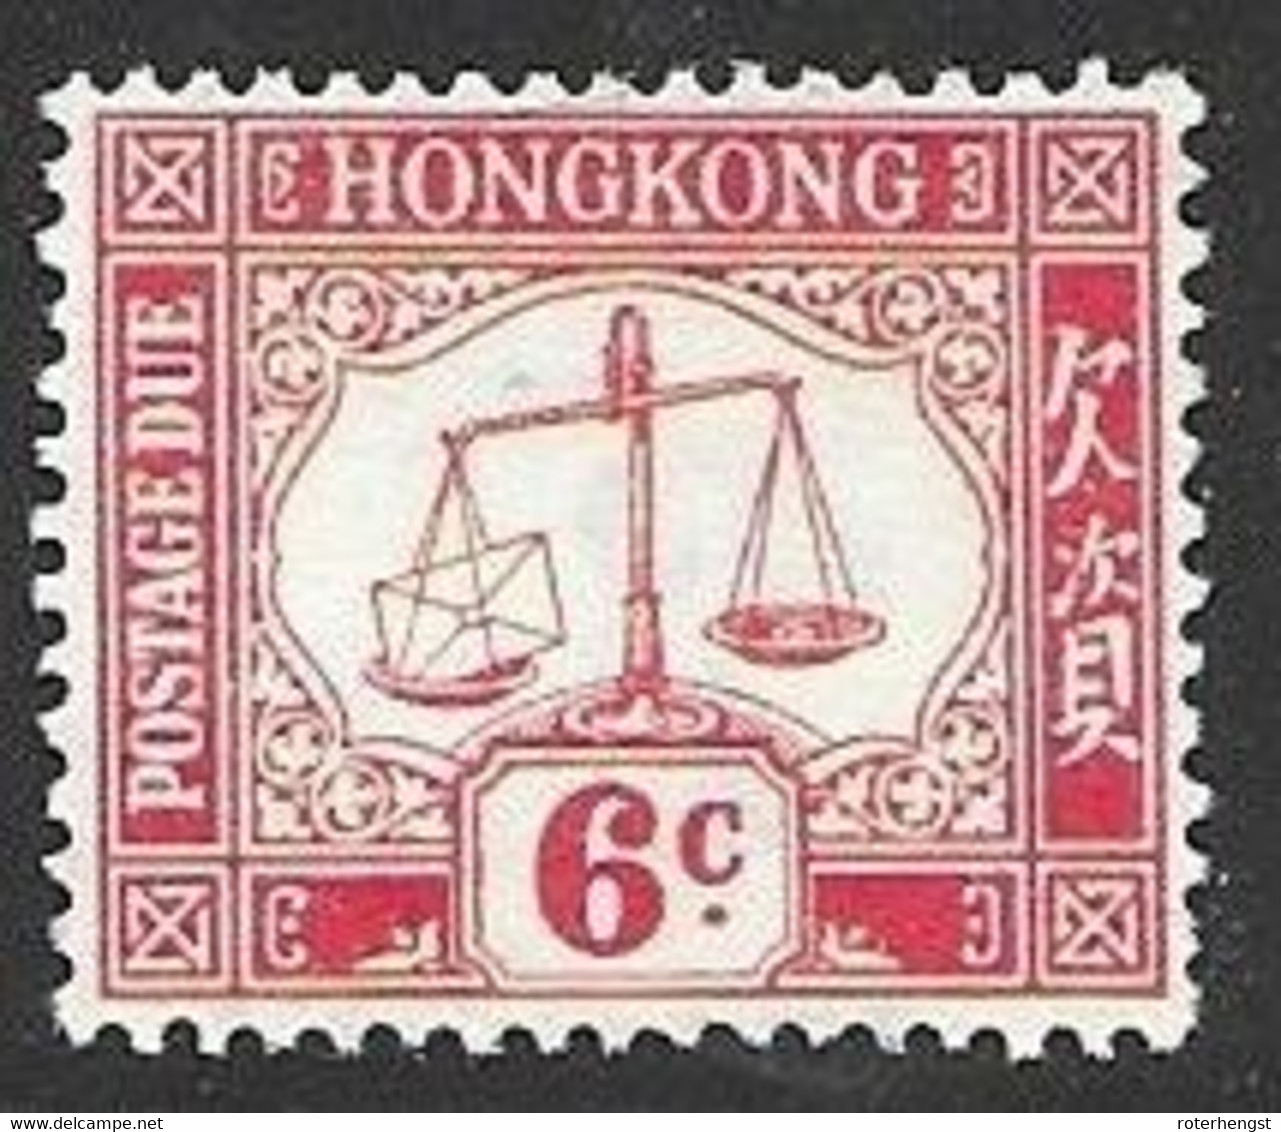 Hong Kong Mint No Gum (14 Euros) 1938 - Postage Due